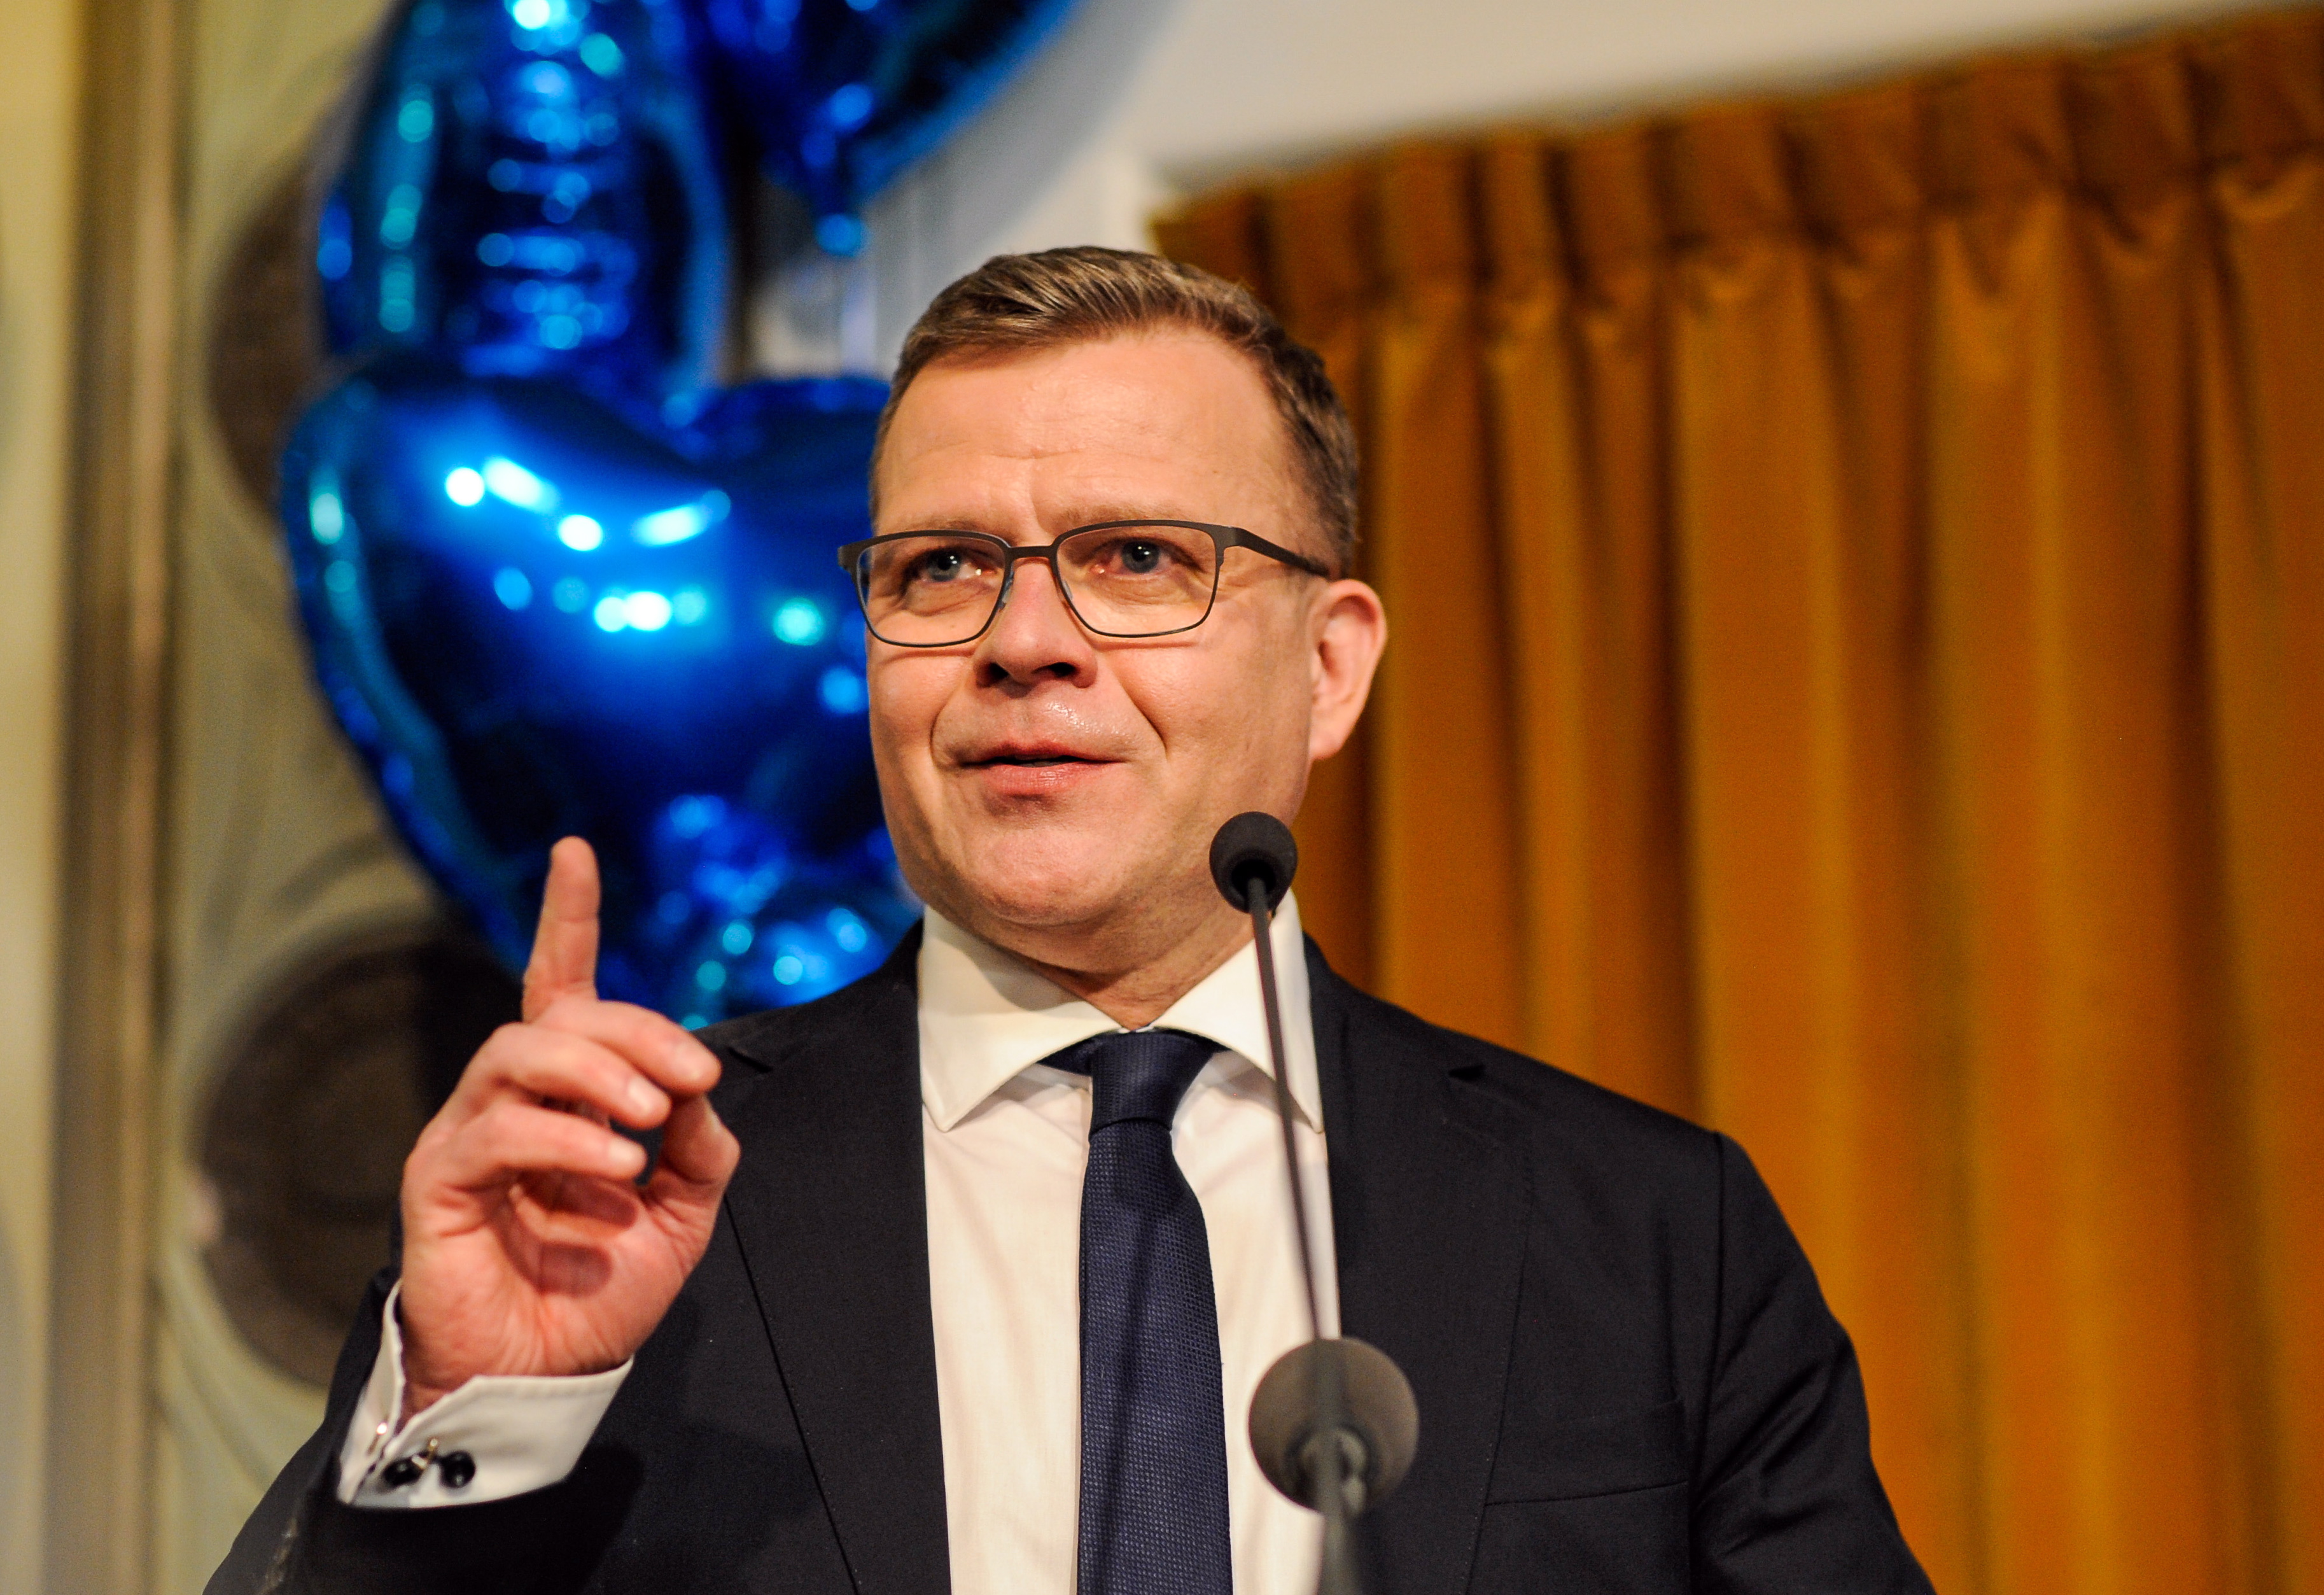 Sanna Marin concedes defeat in Finland election as centre-right